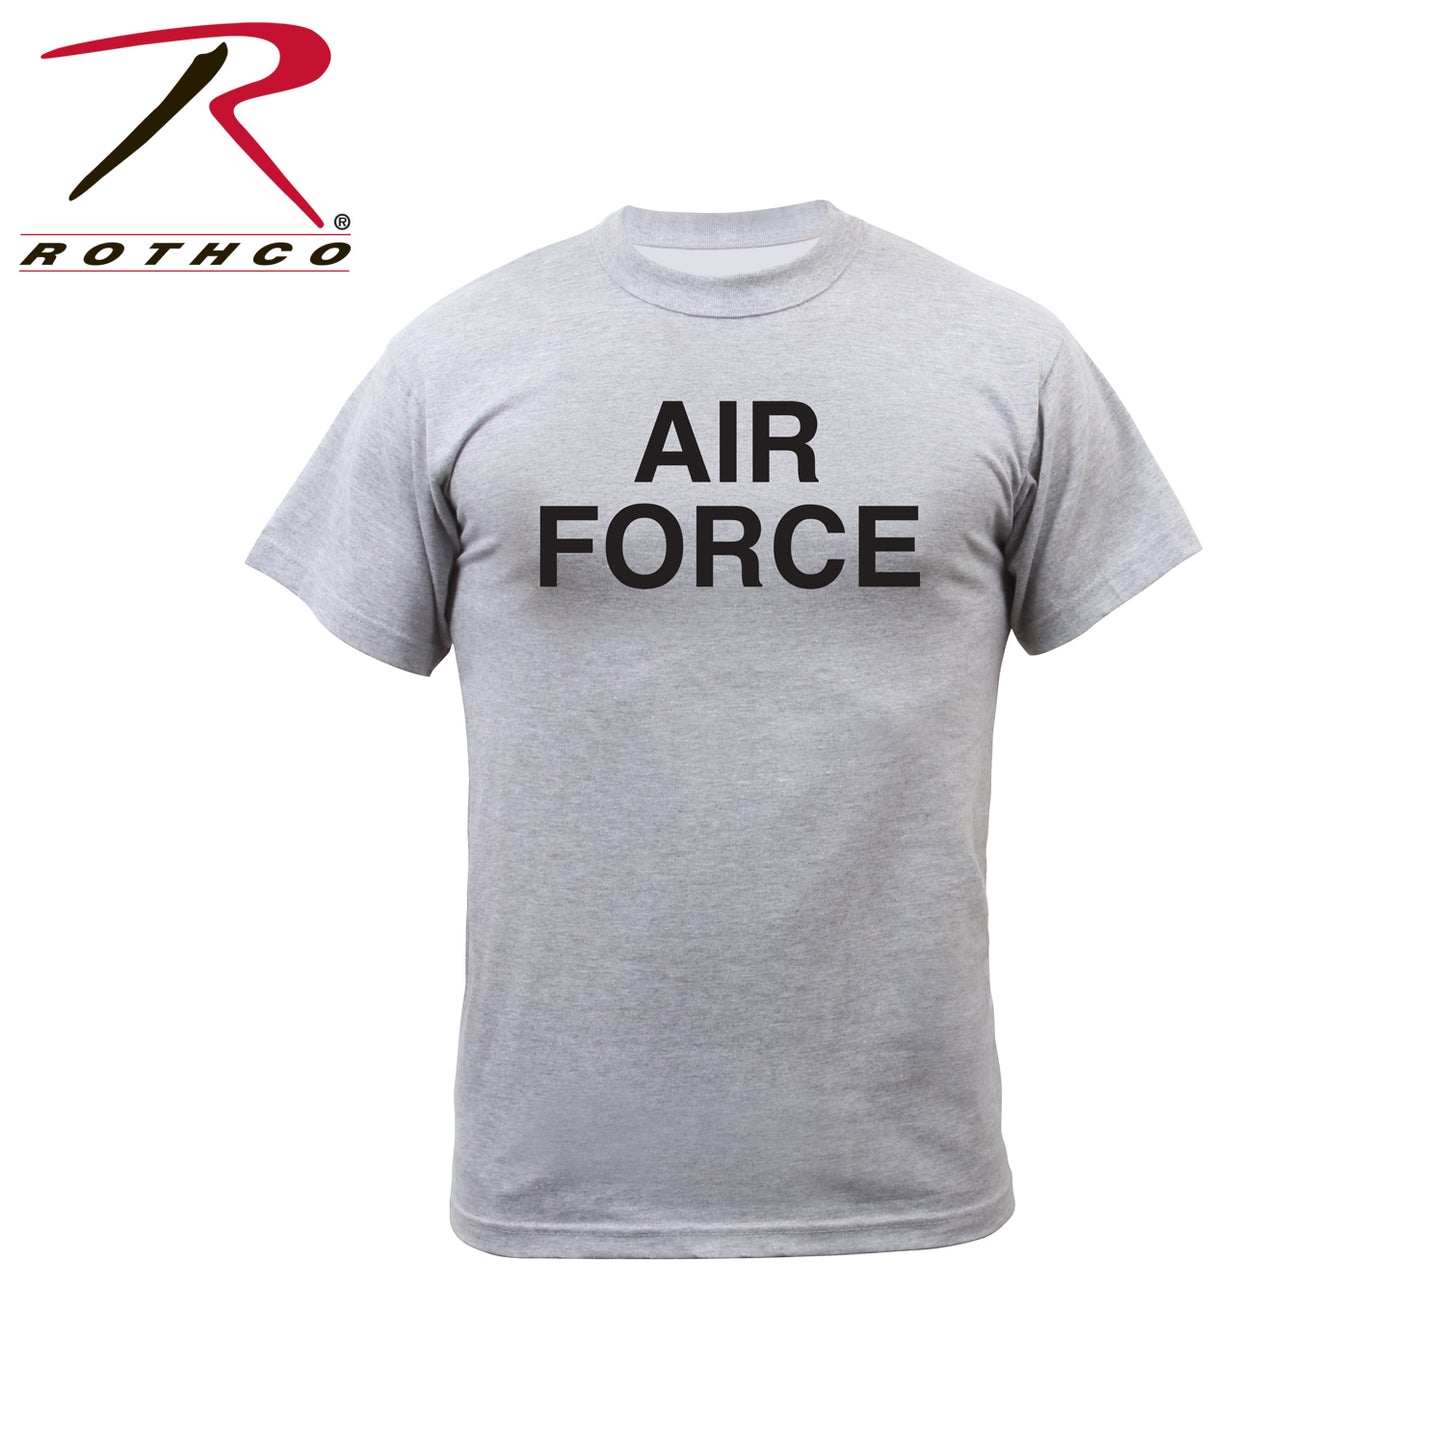 'Air Force' Physical Training T-Shirt